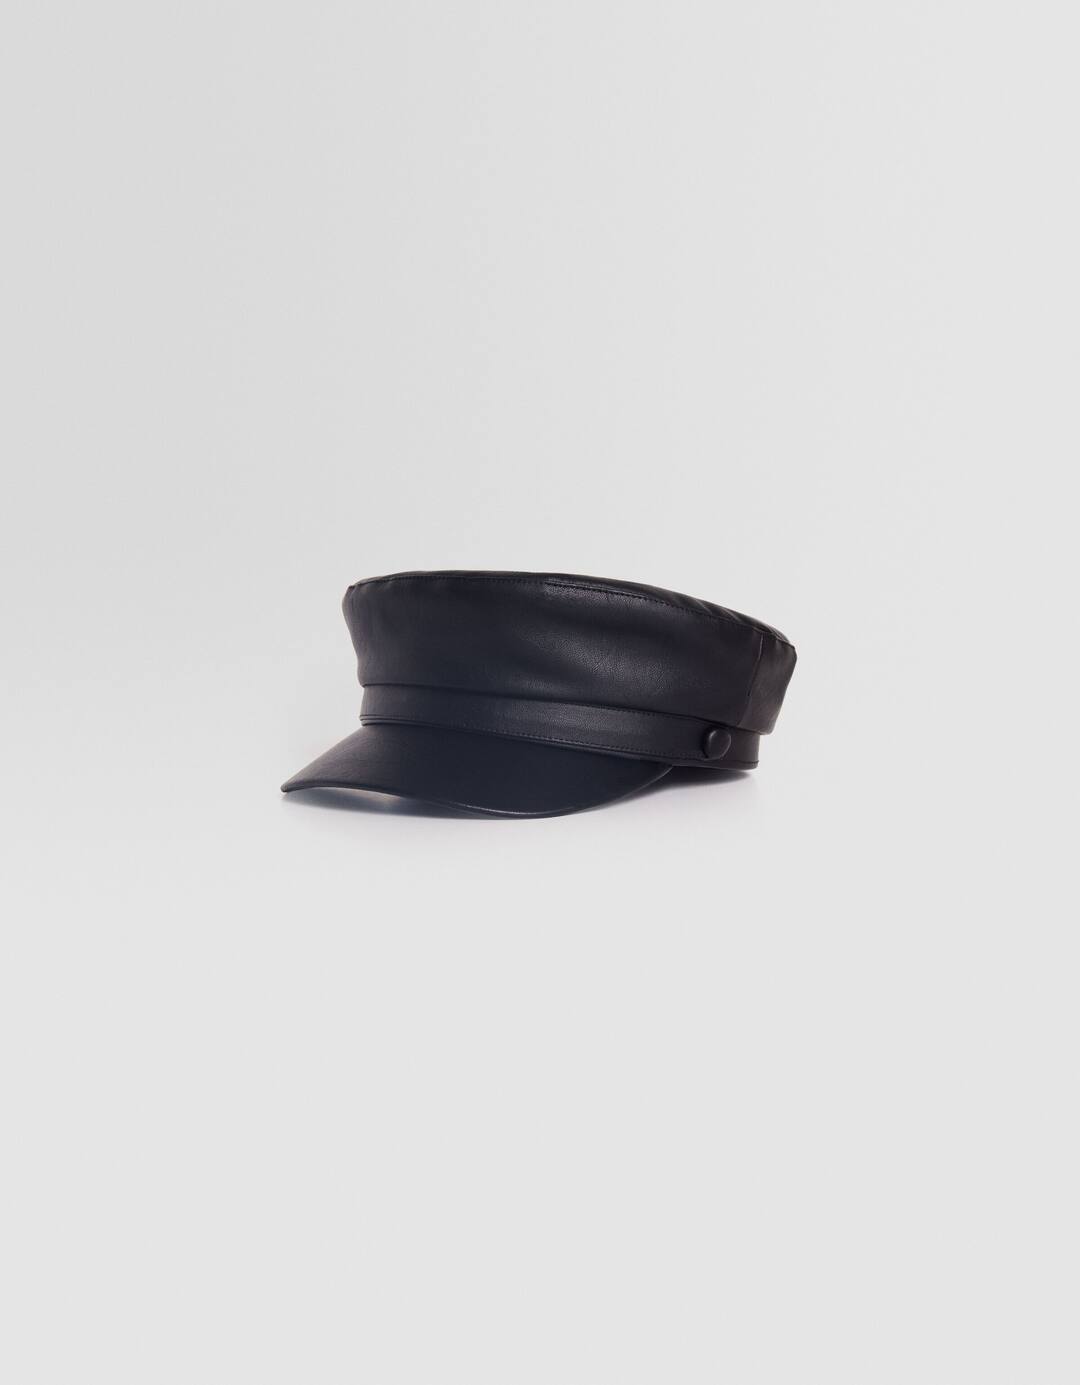 Mornarska kapa od veštačke kože